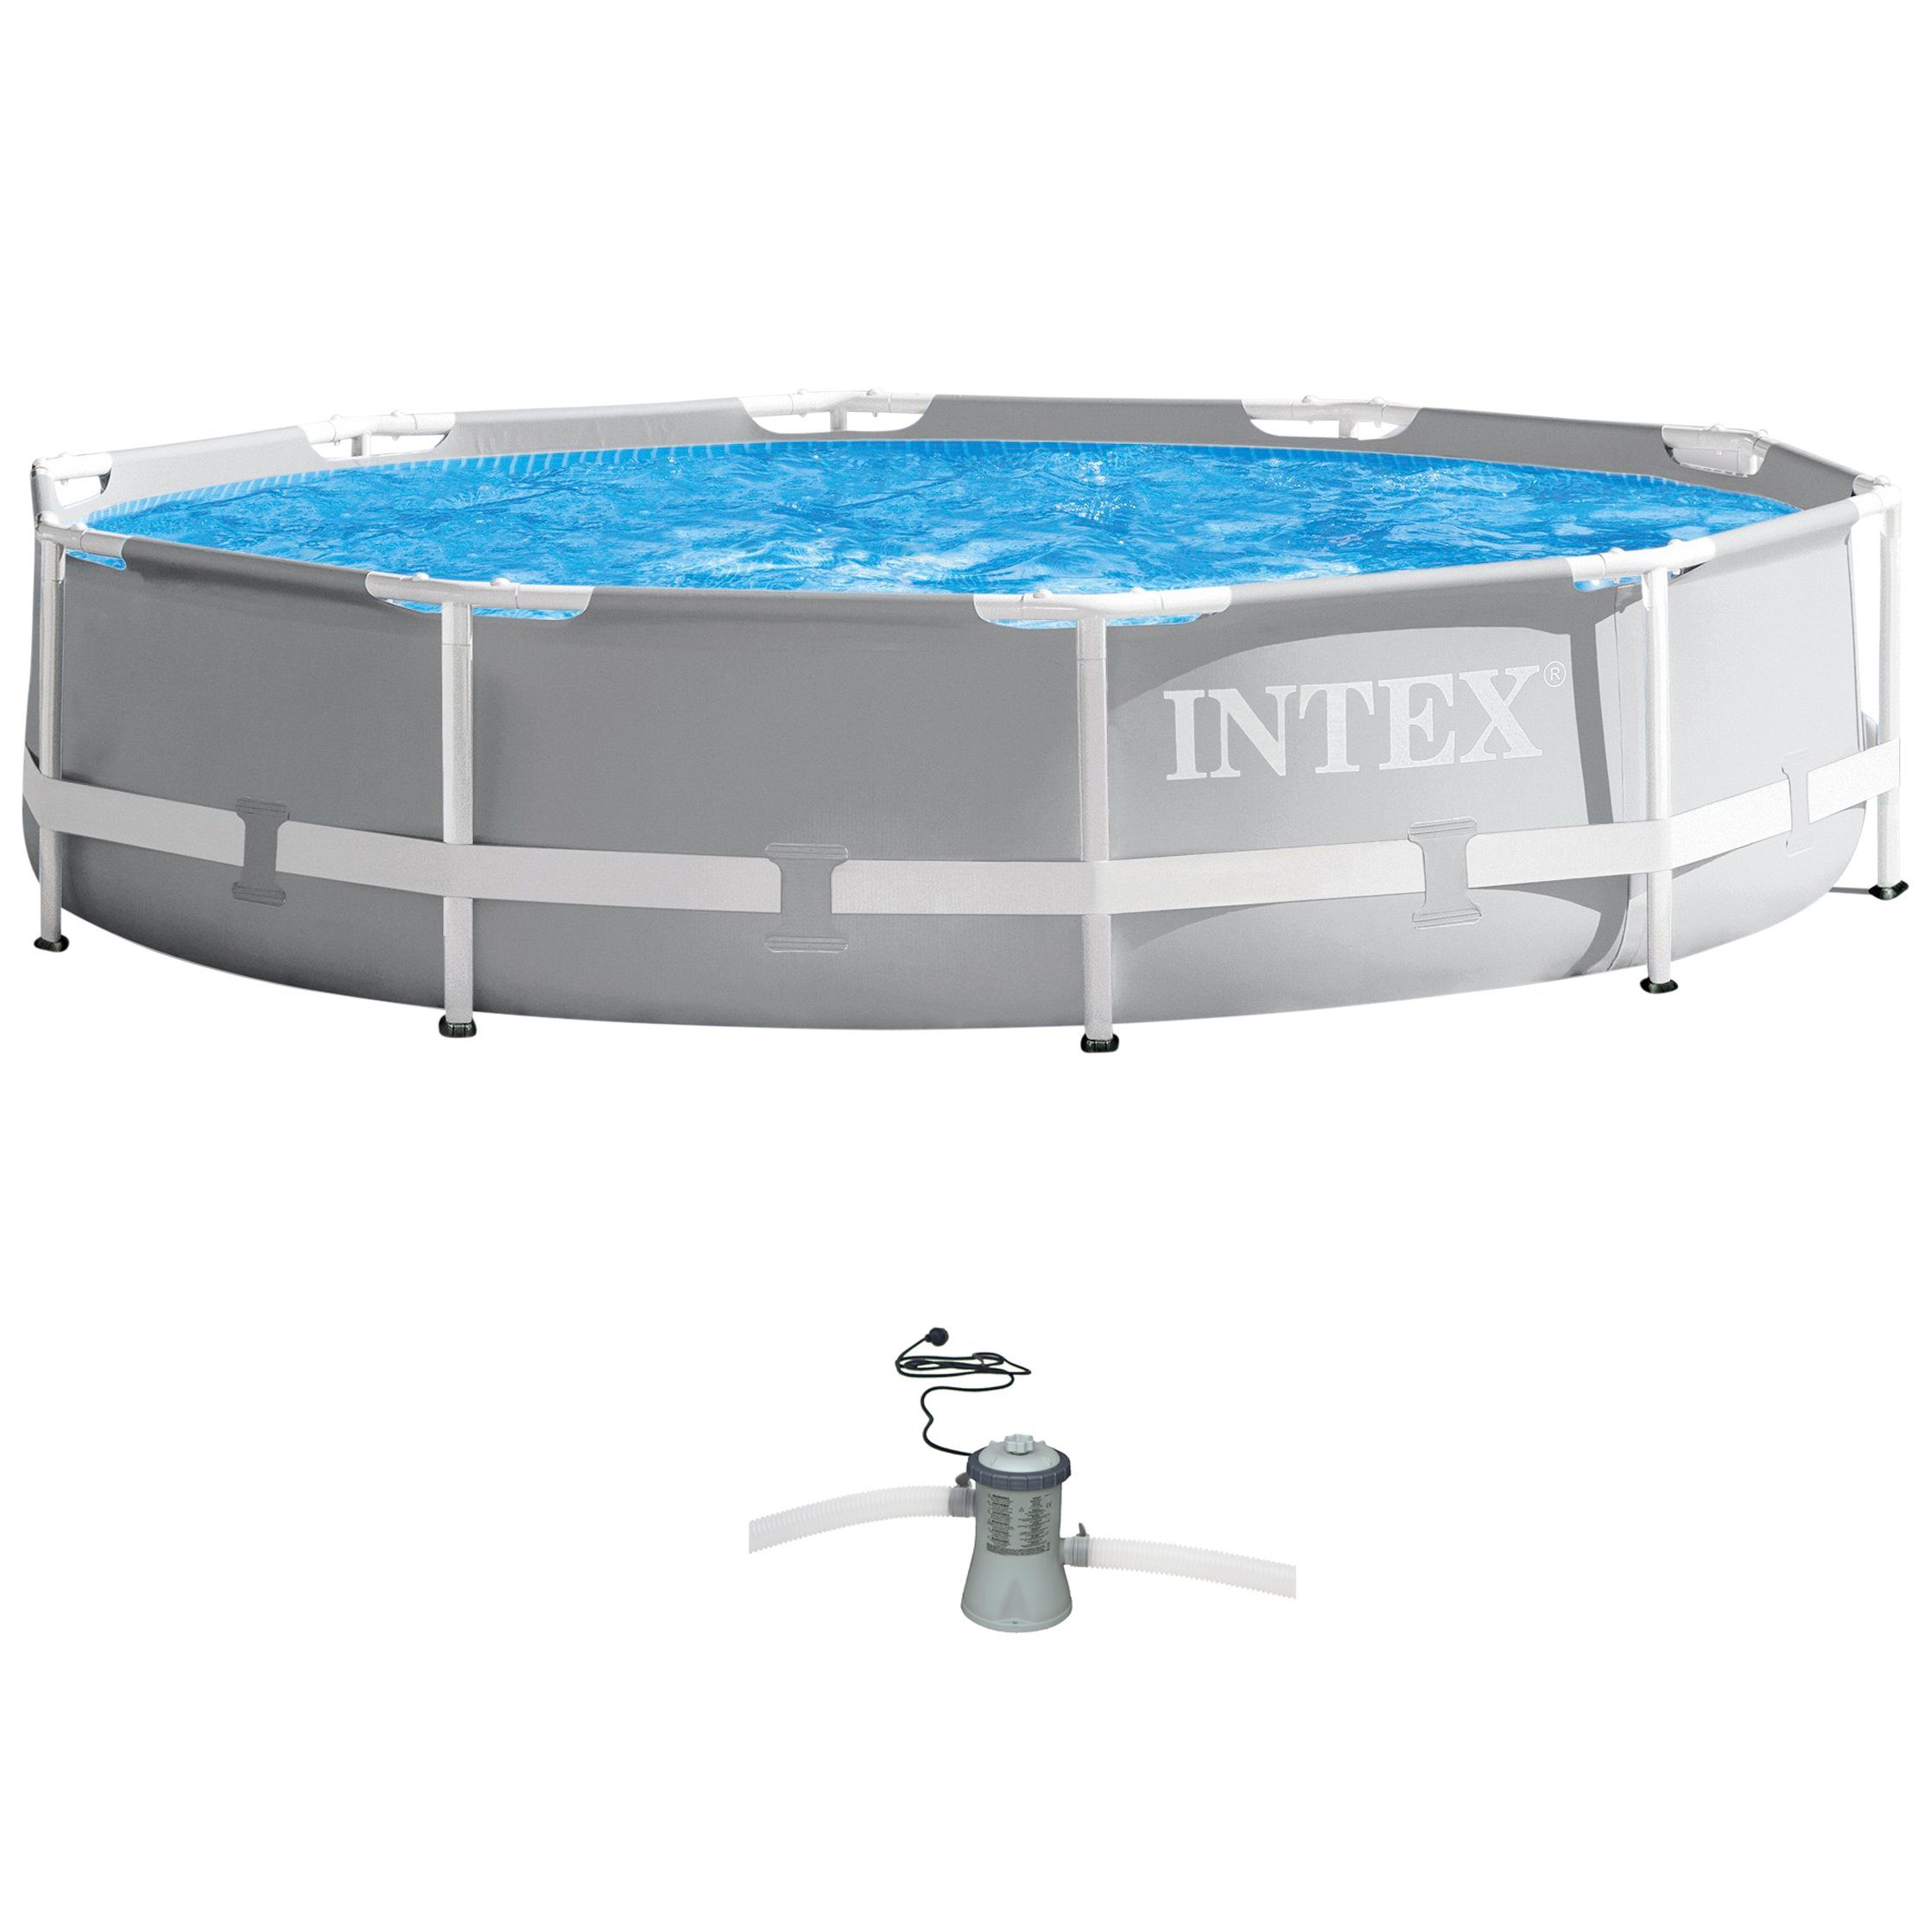 Intex Pool-Komplettsets online kaufen | OTTO